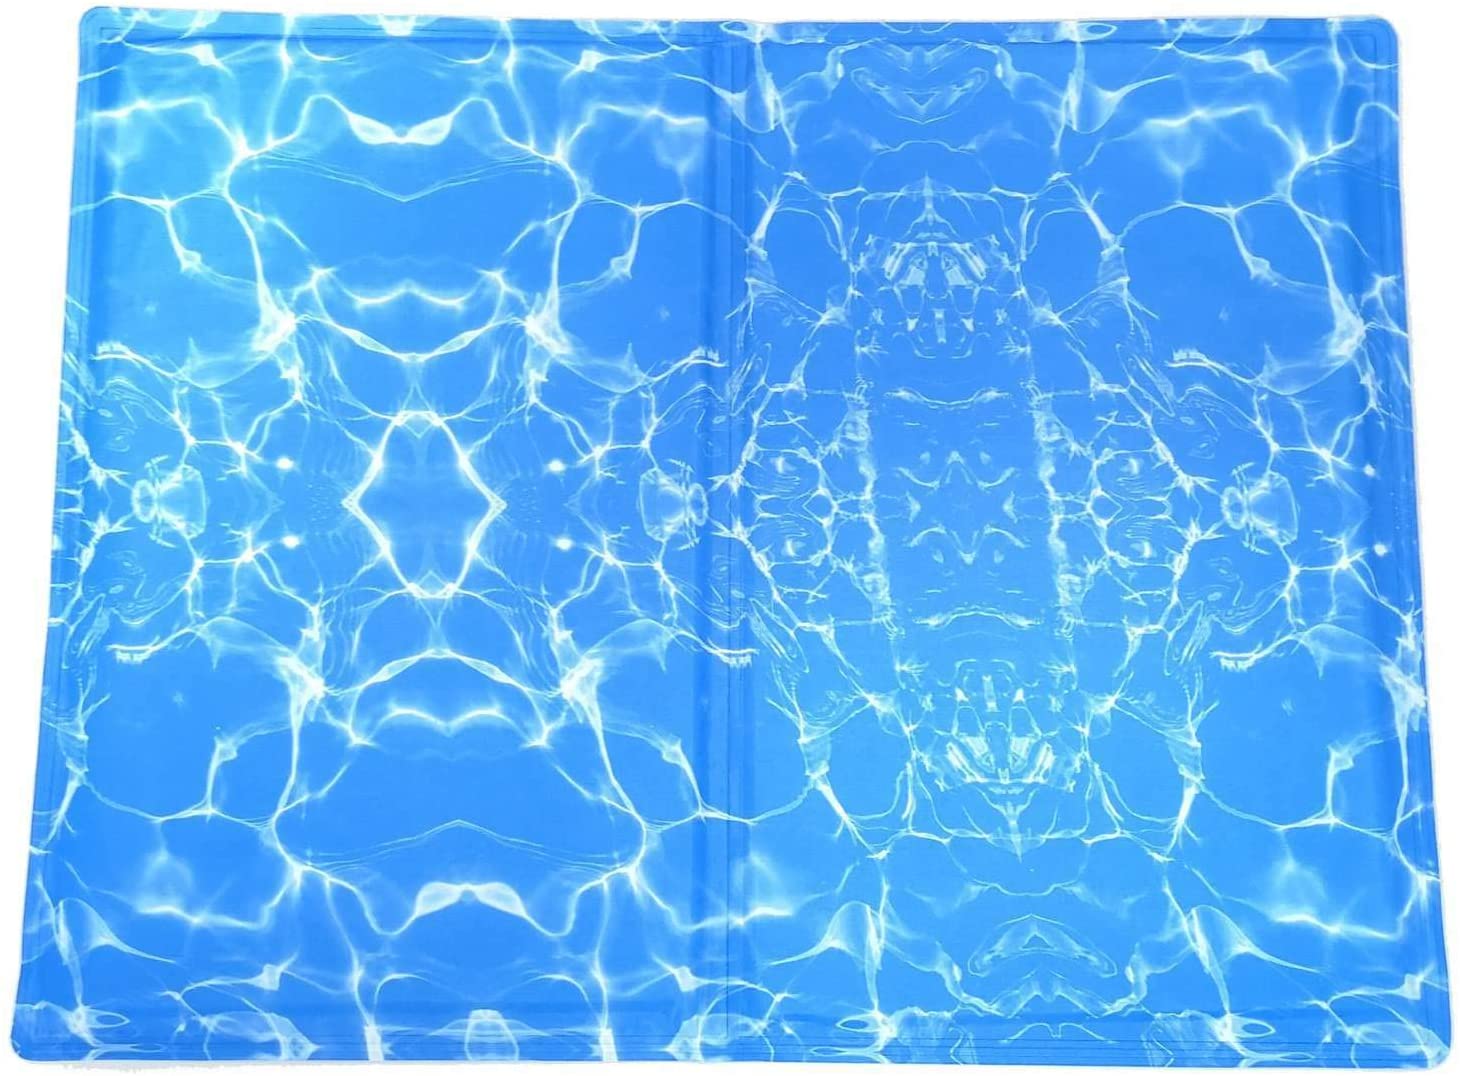 Kühlmatte für Hunde 65 x 50 cm, blau Wellendesign